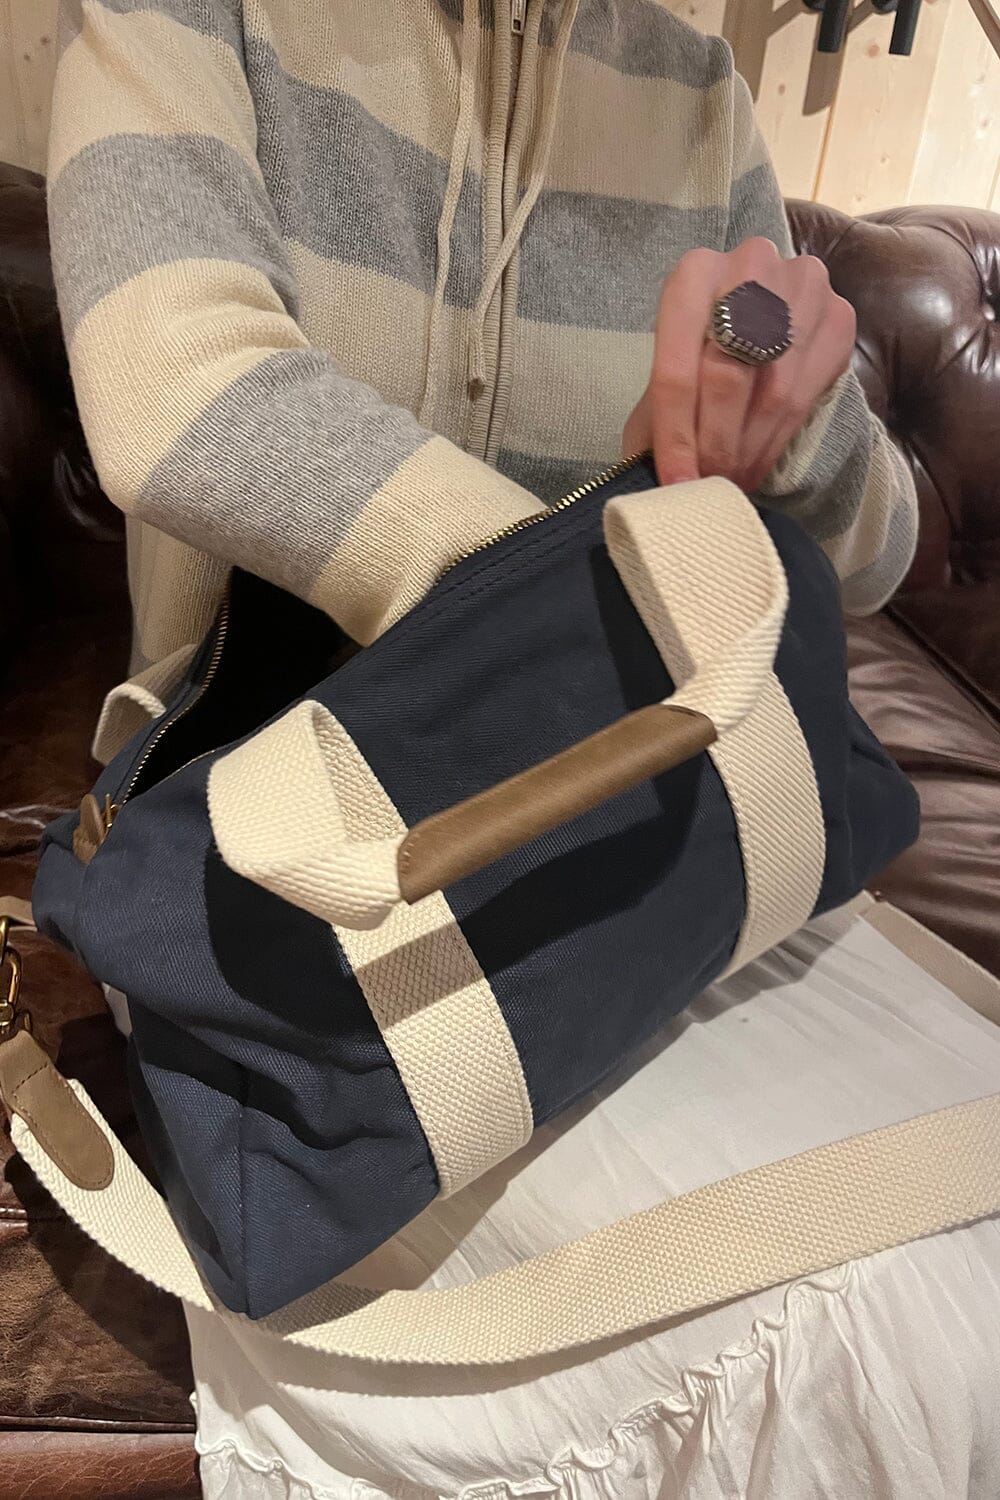 Brandy Melville Duffle Bag